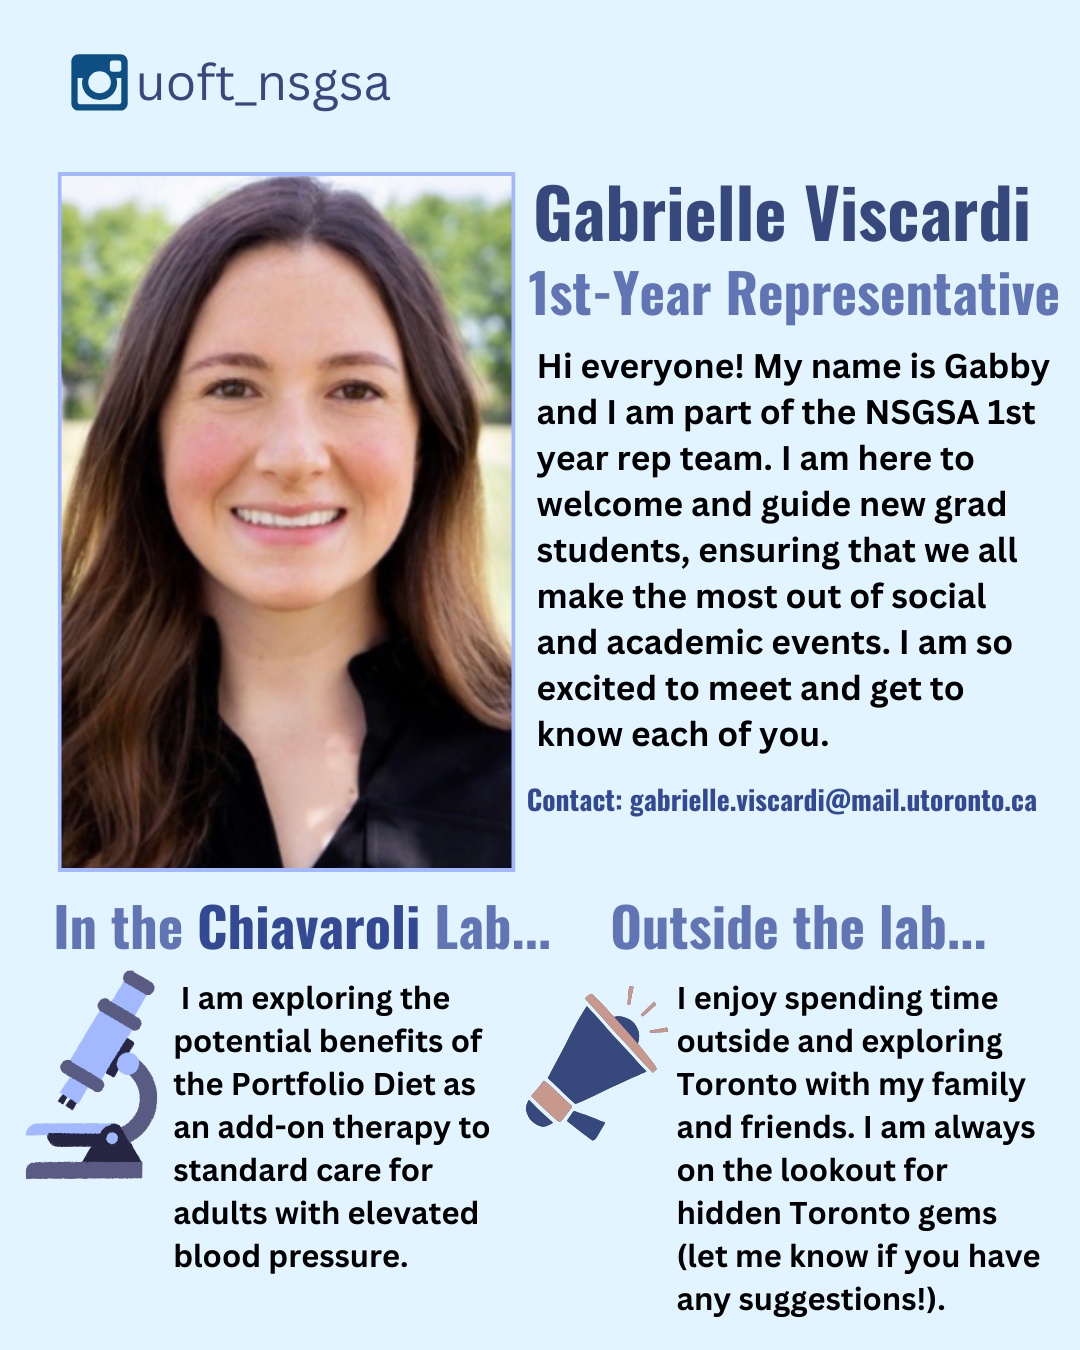 Gabrielle Viscardi, 1st Year Representative